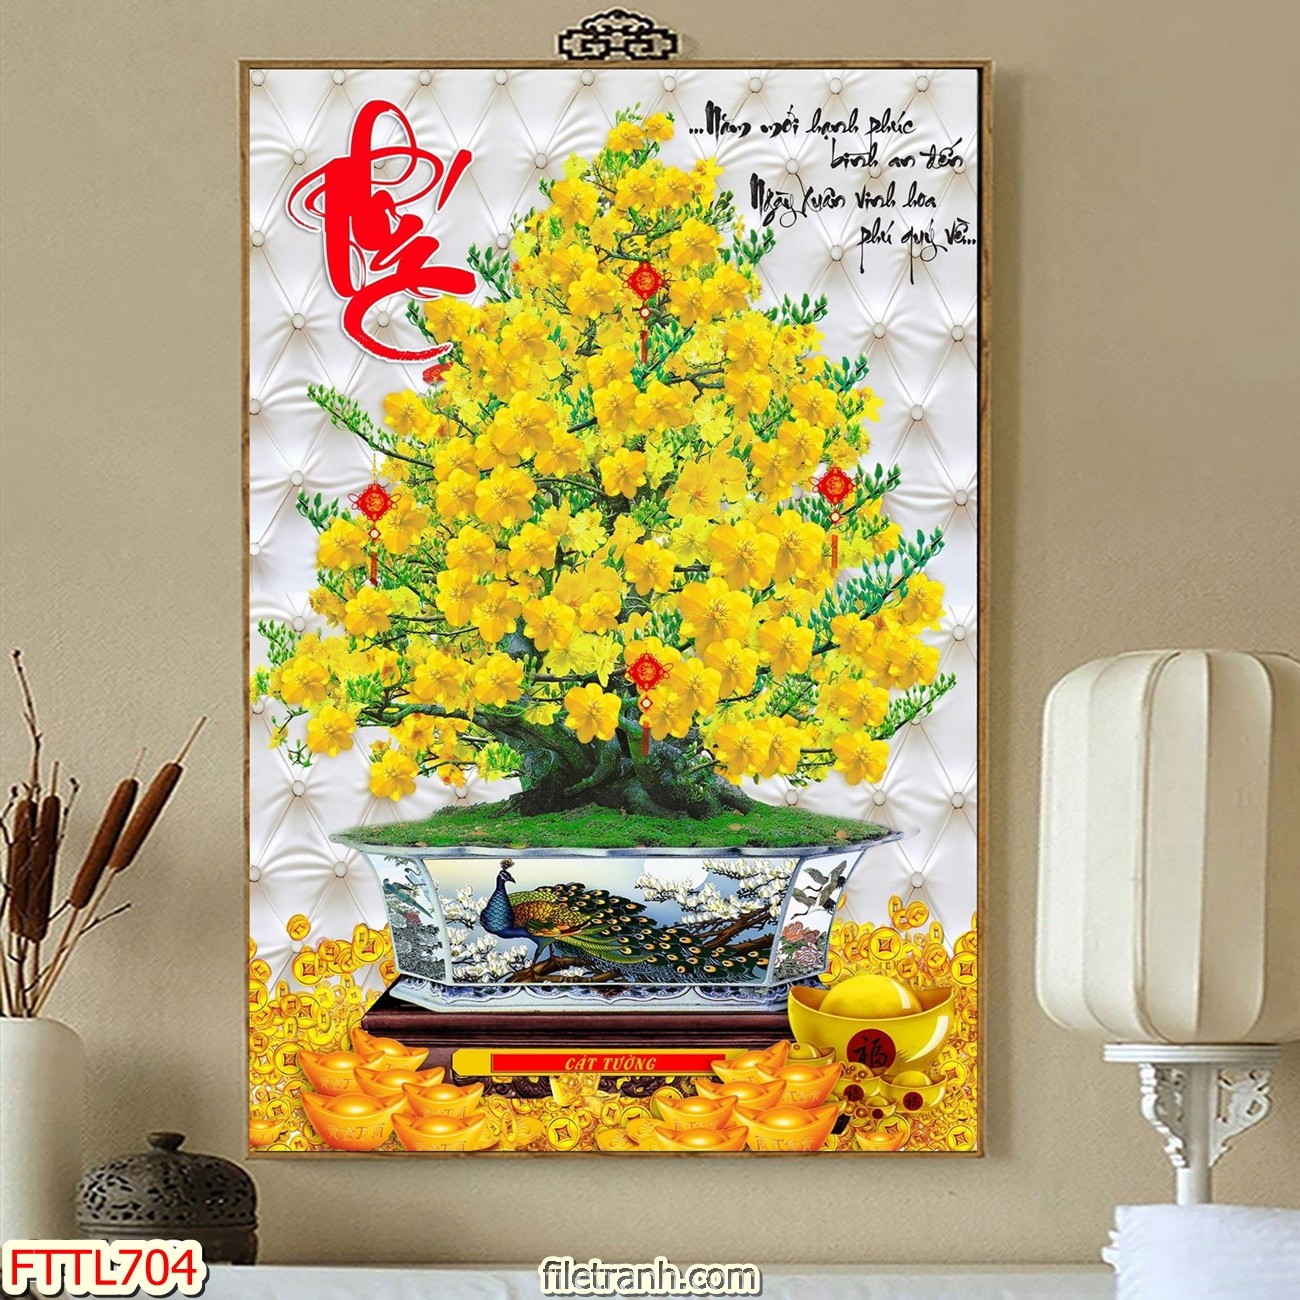 https://filetranh.com/file-tranh-chau-mai-bonsai/file-tranh-chau-mai-bonsai-fttl704.html